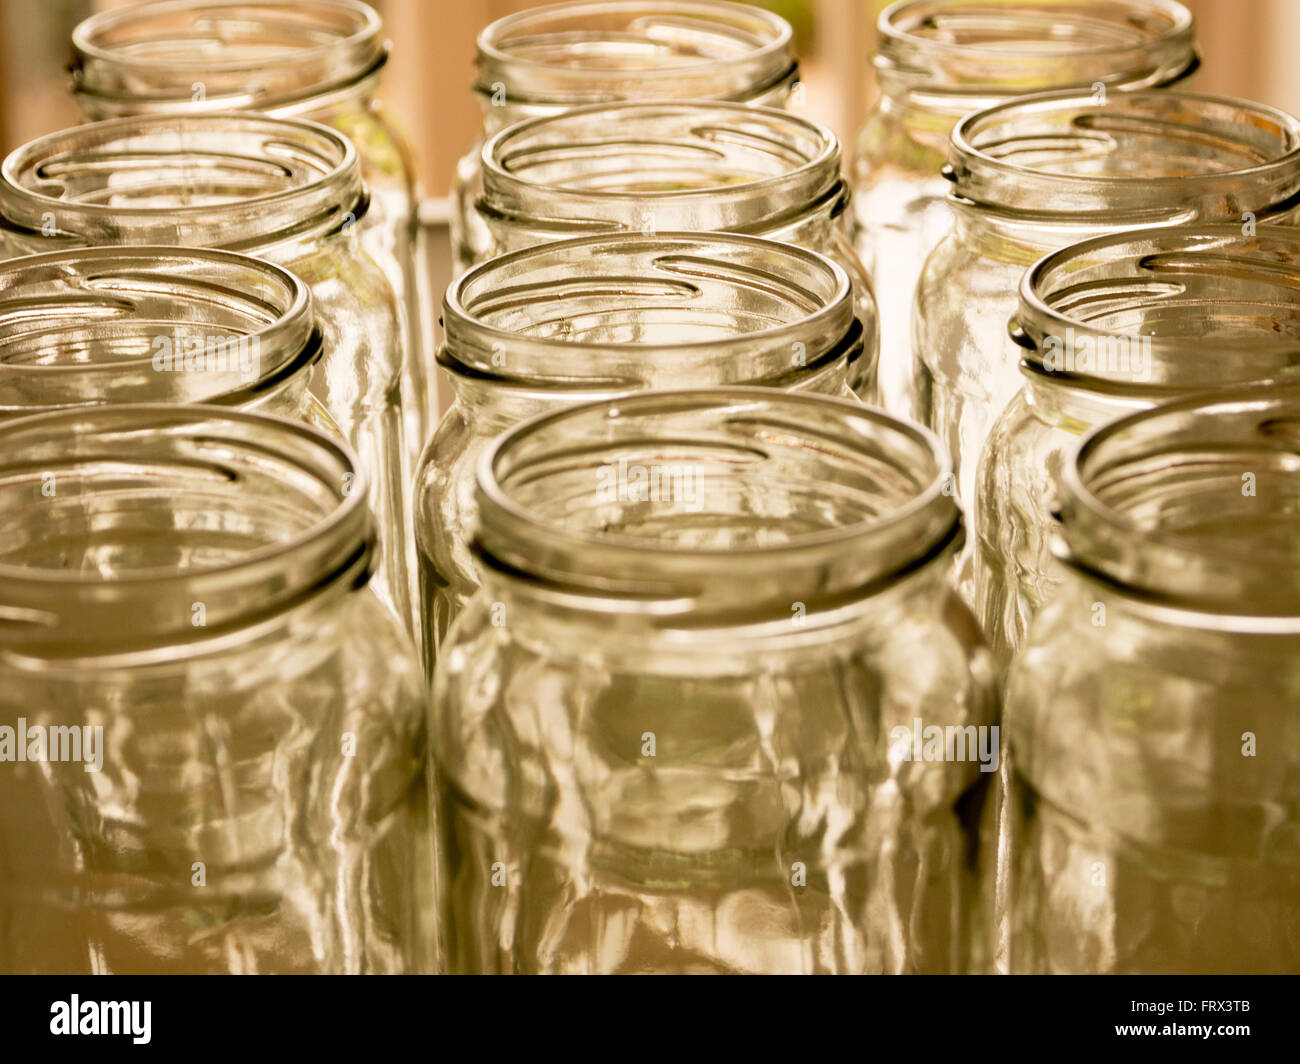 Jam Making - empty jam jars Stock Photo